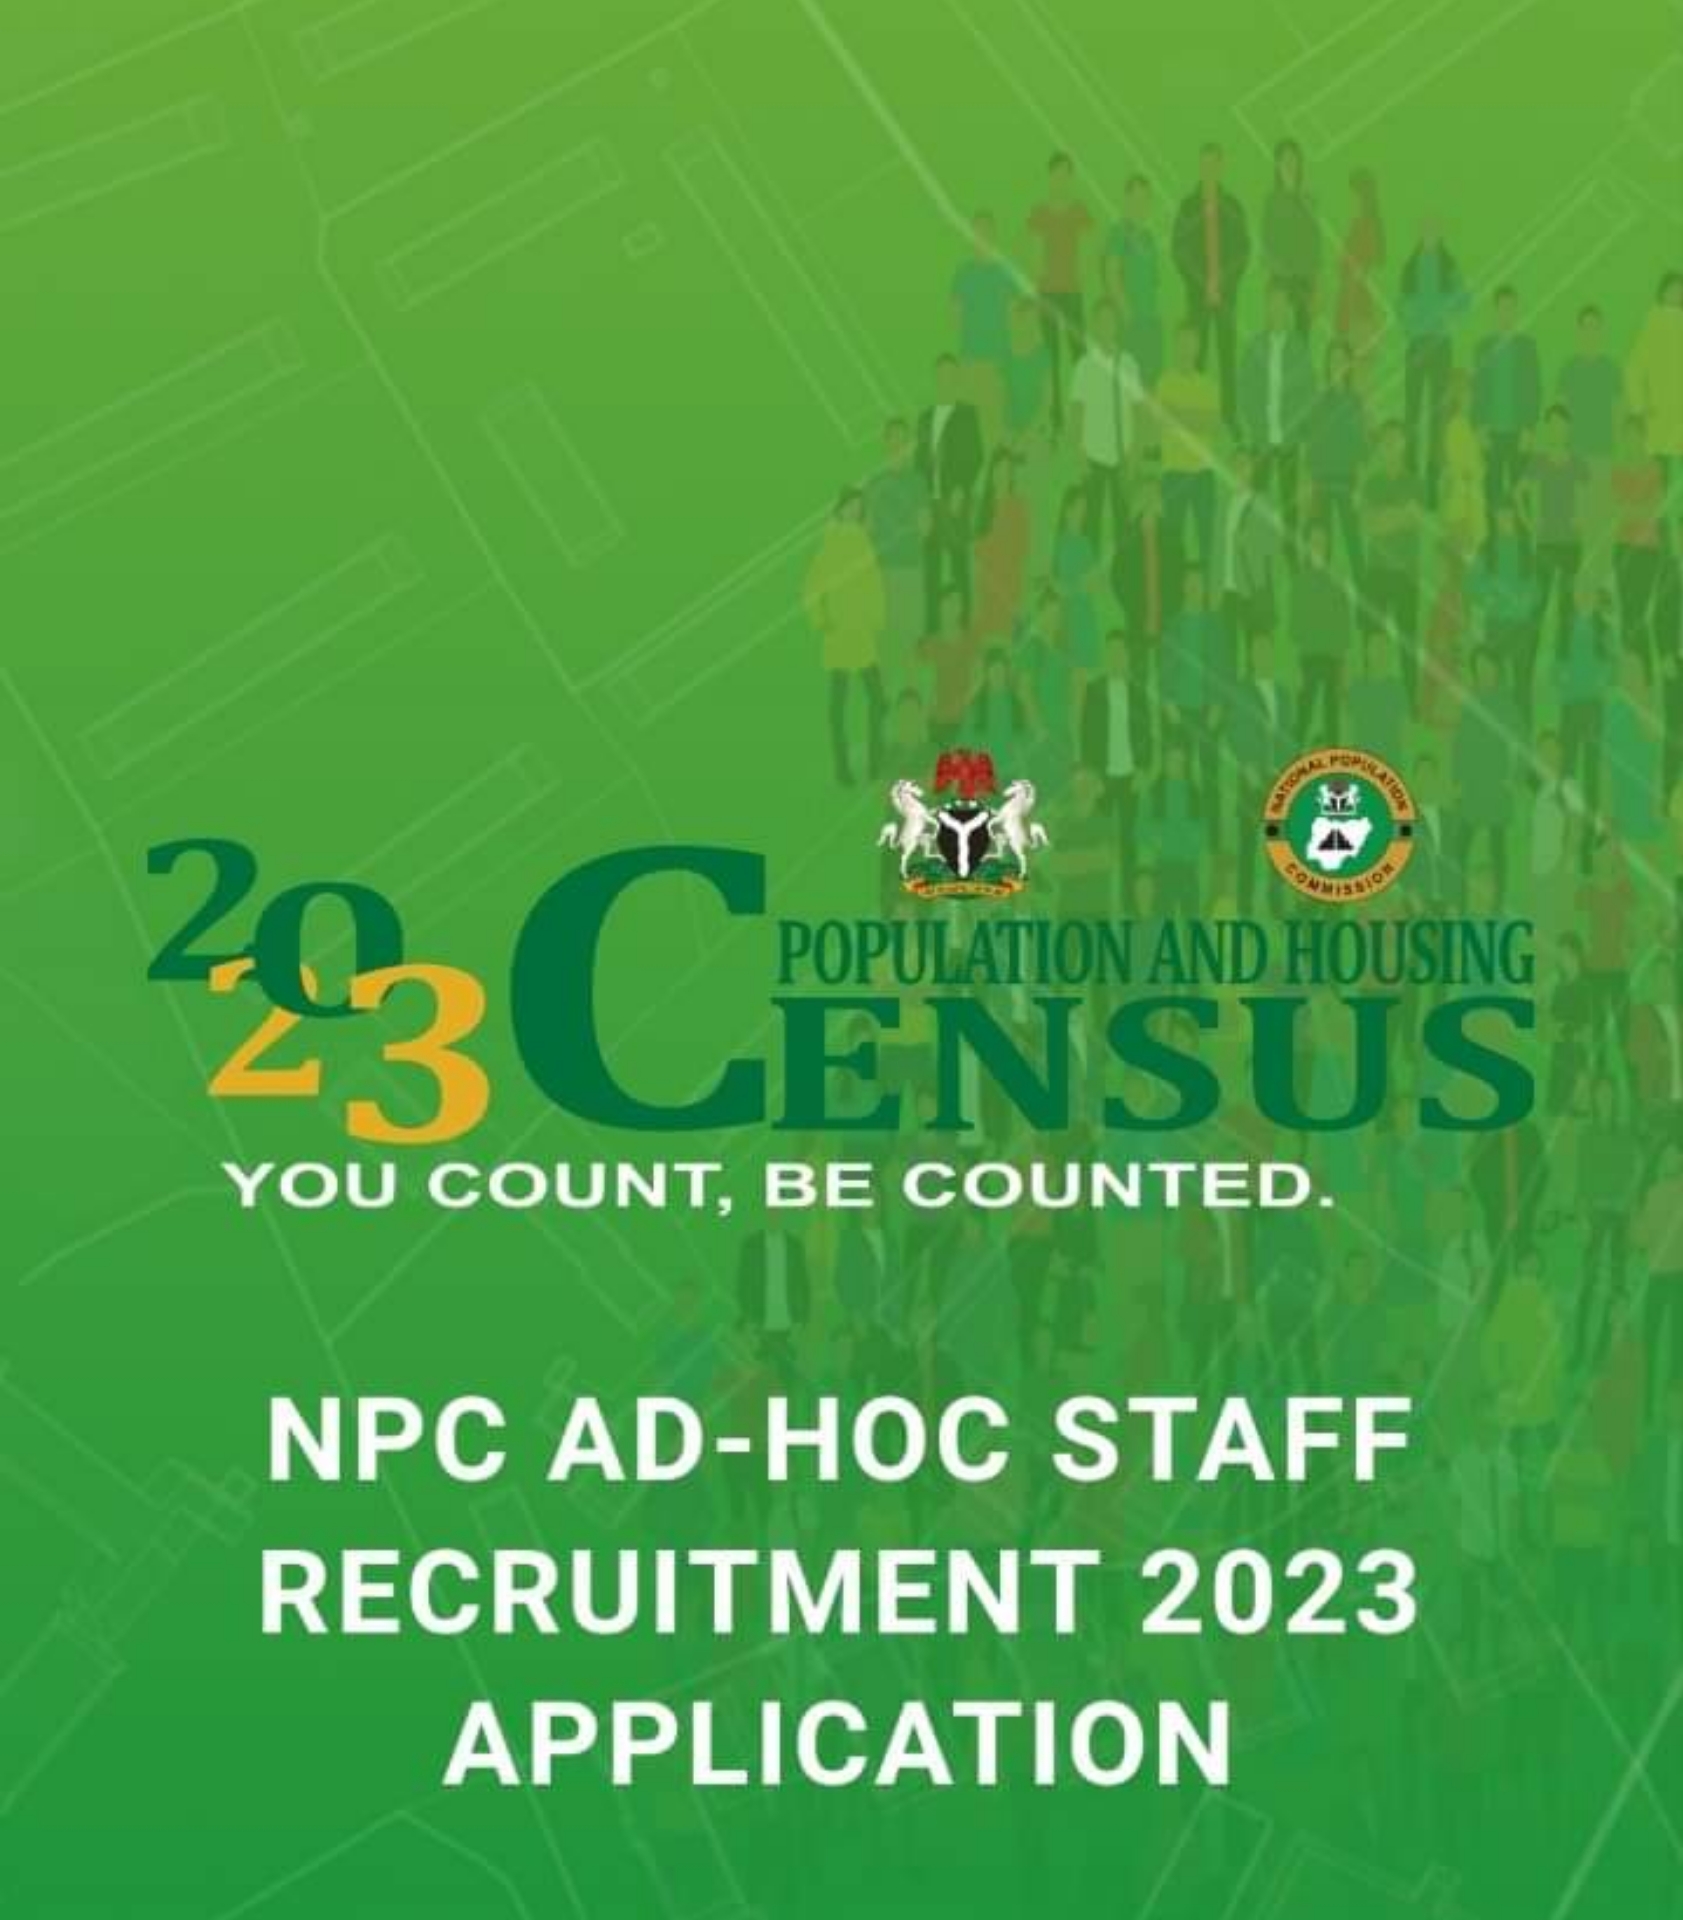 LINK TO APPLY FOR NPC AD-HOC STAFF E-RECRUITMENT PORTAl FOR 2023 CENSUS